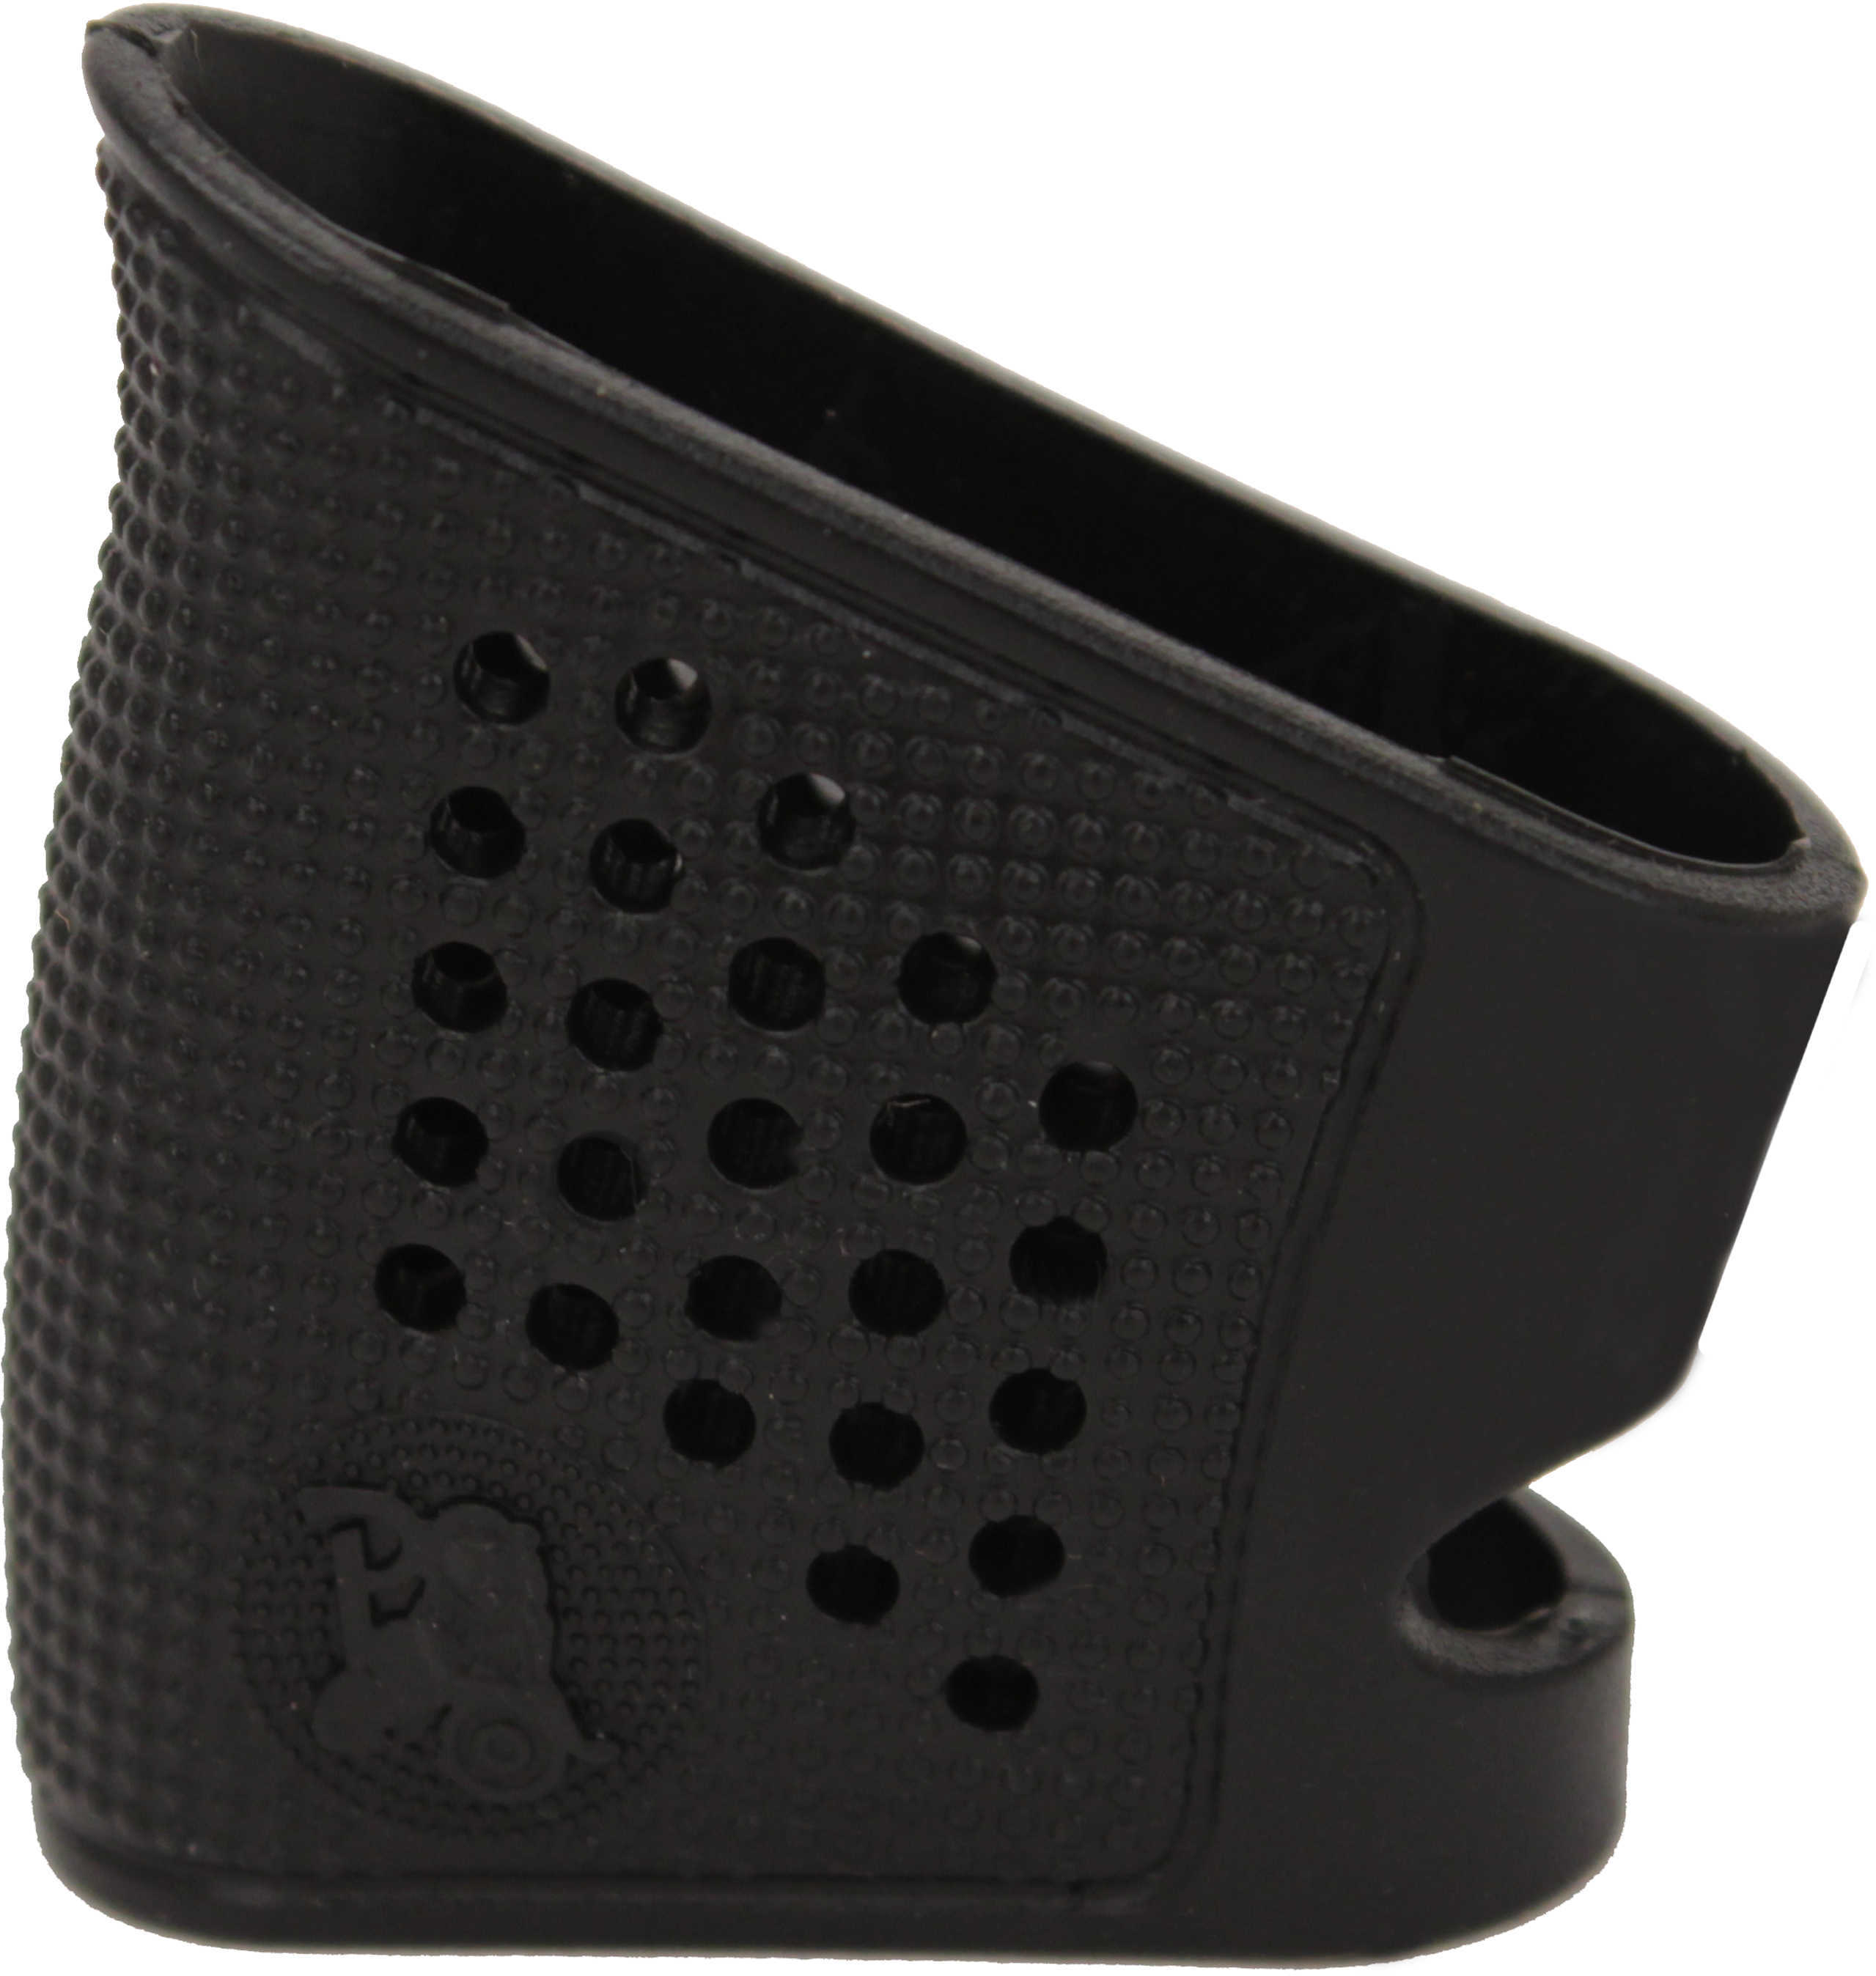 Pachmayr Tactical Grip Glove S&W Bodyguard Model: 5173